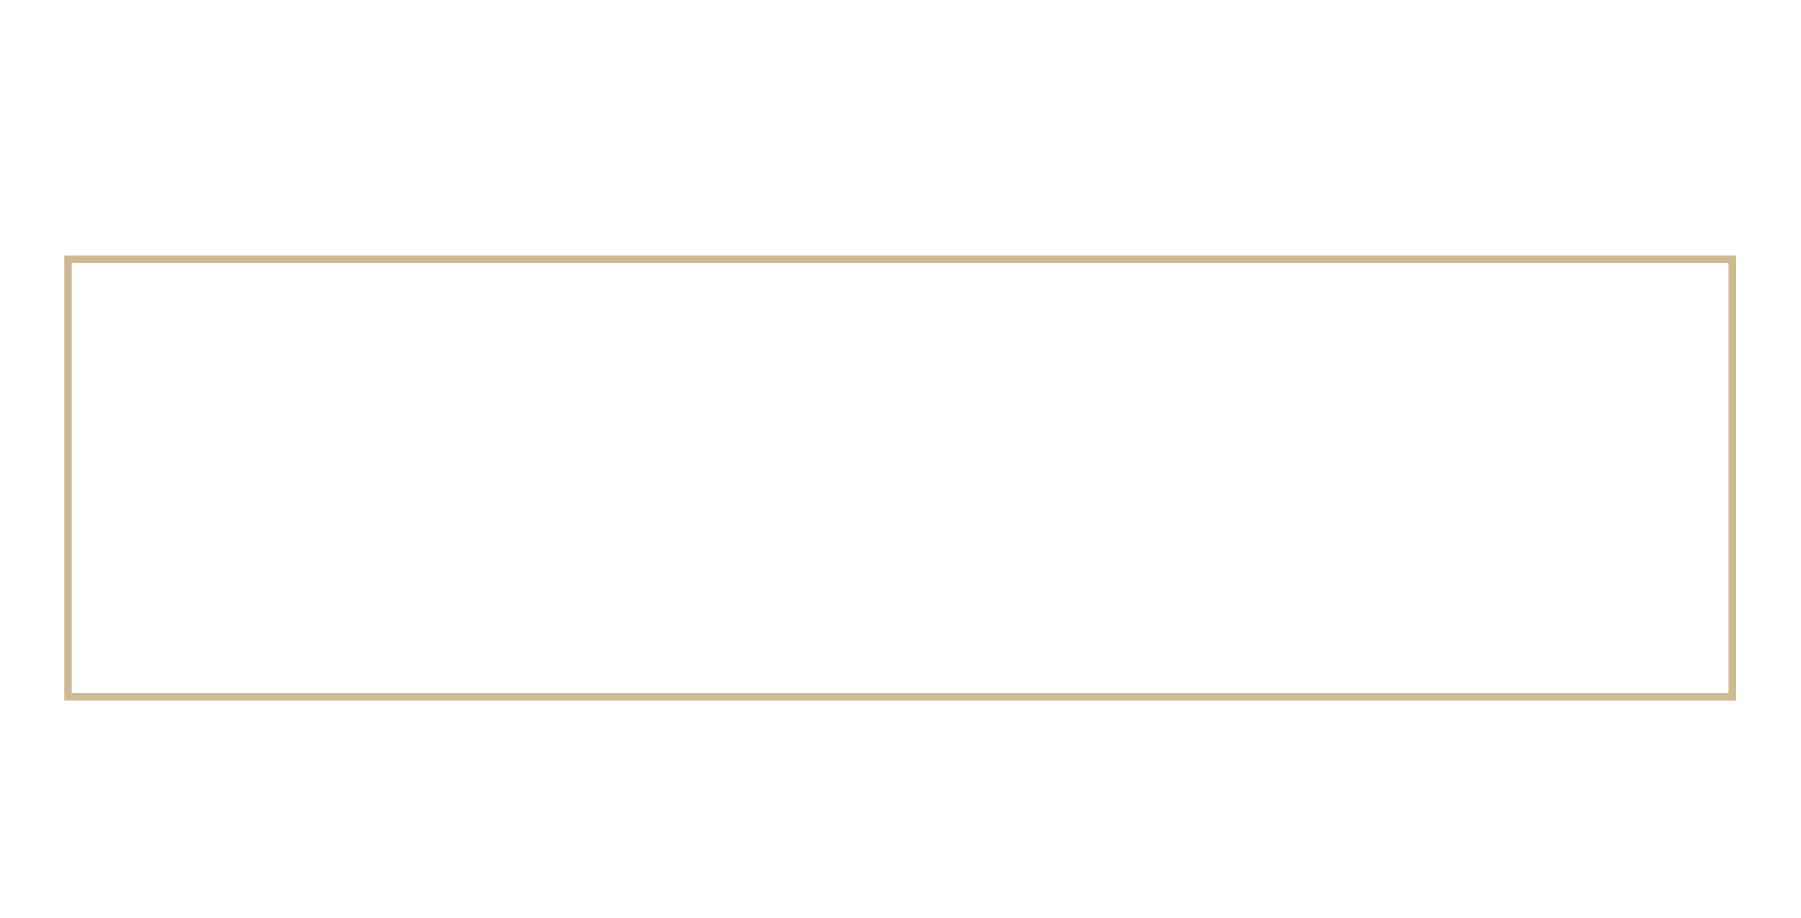 Composites Manufacturing and Simulation Center